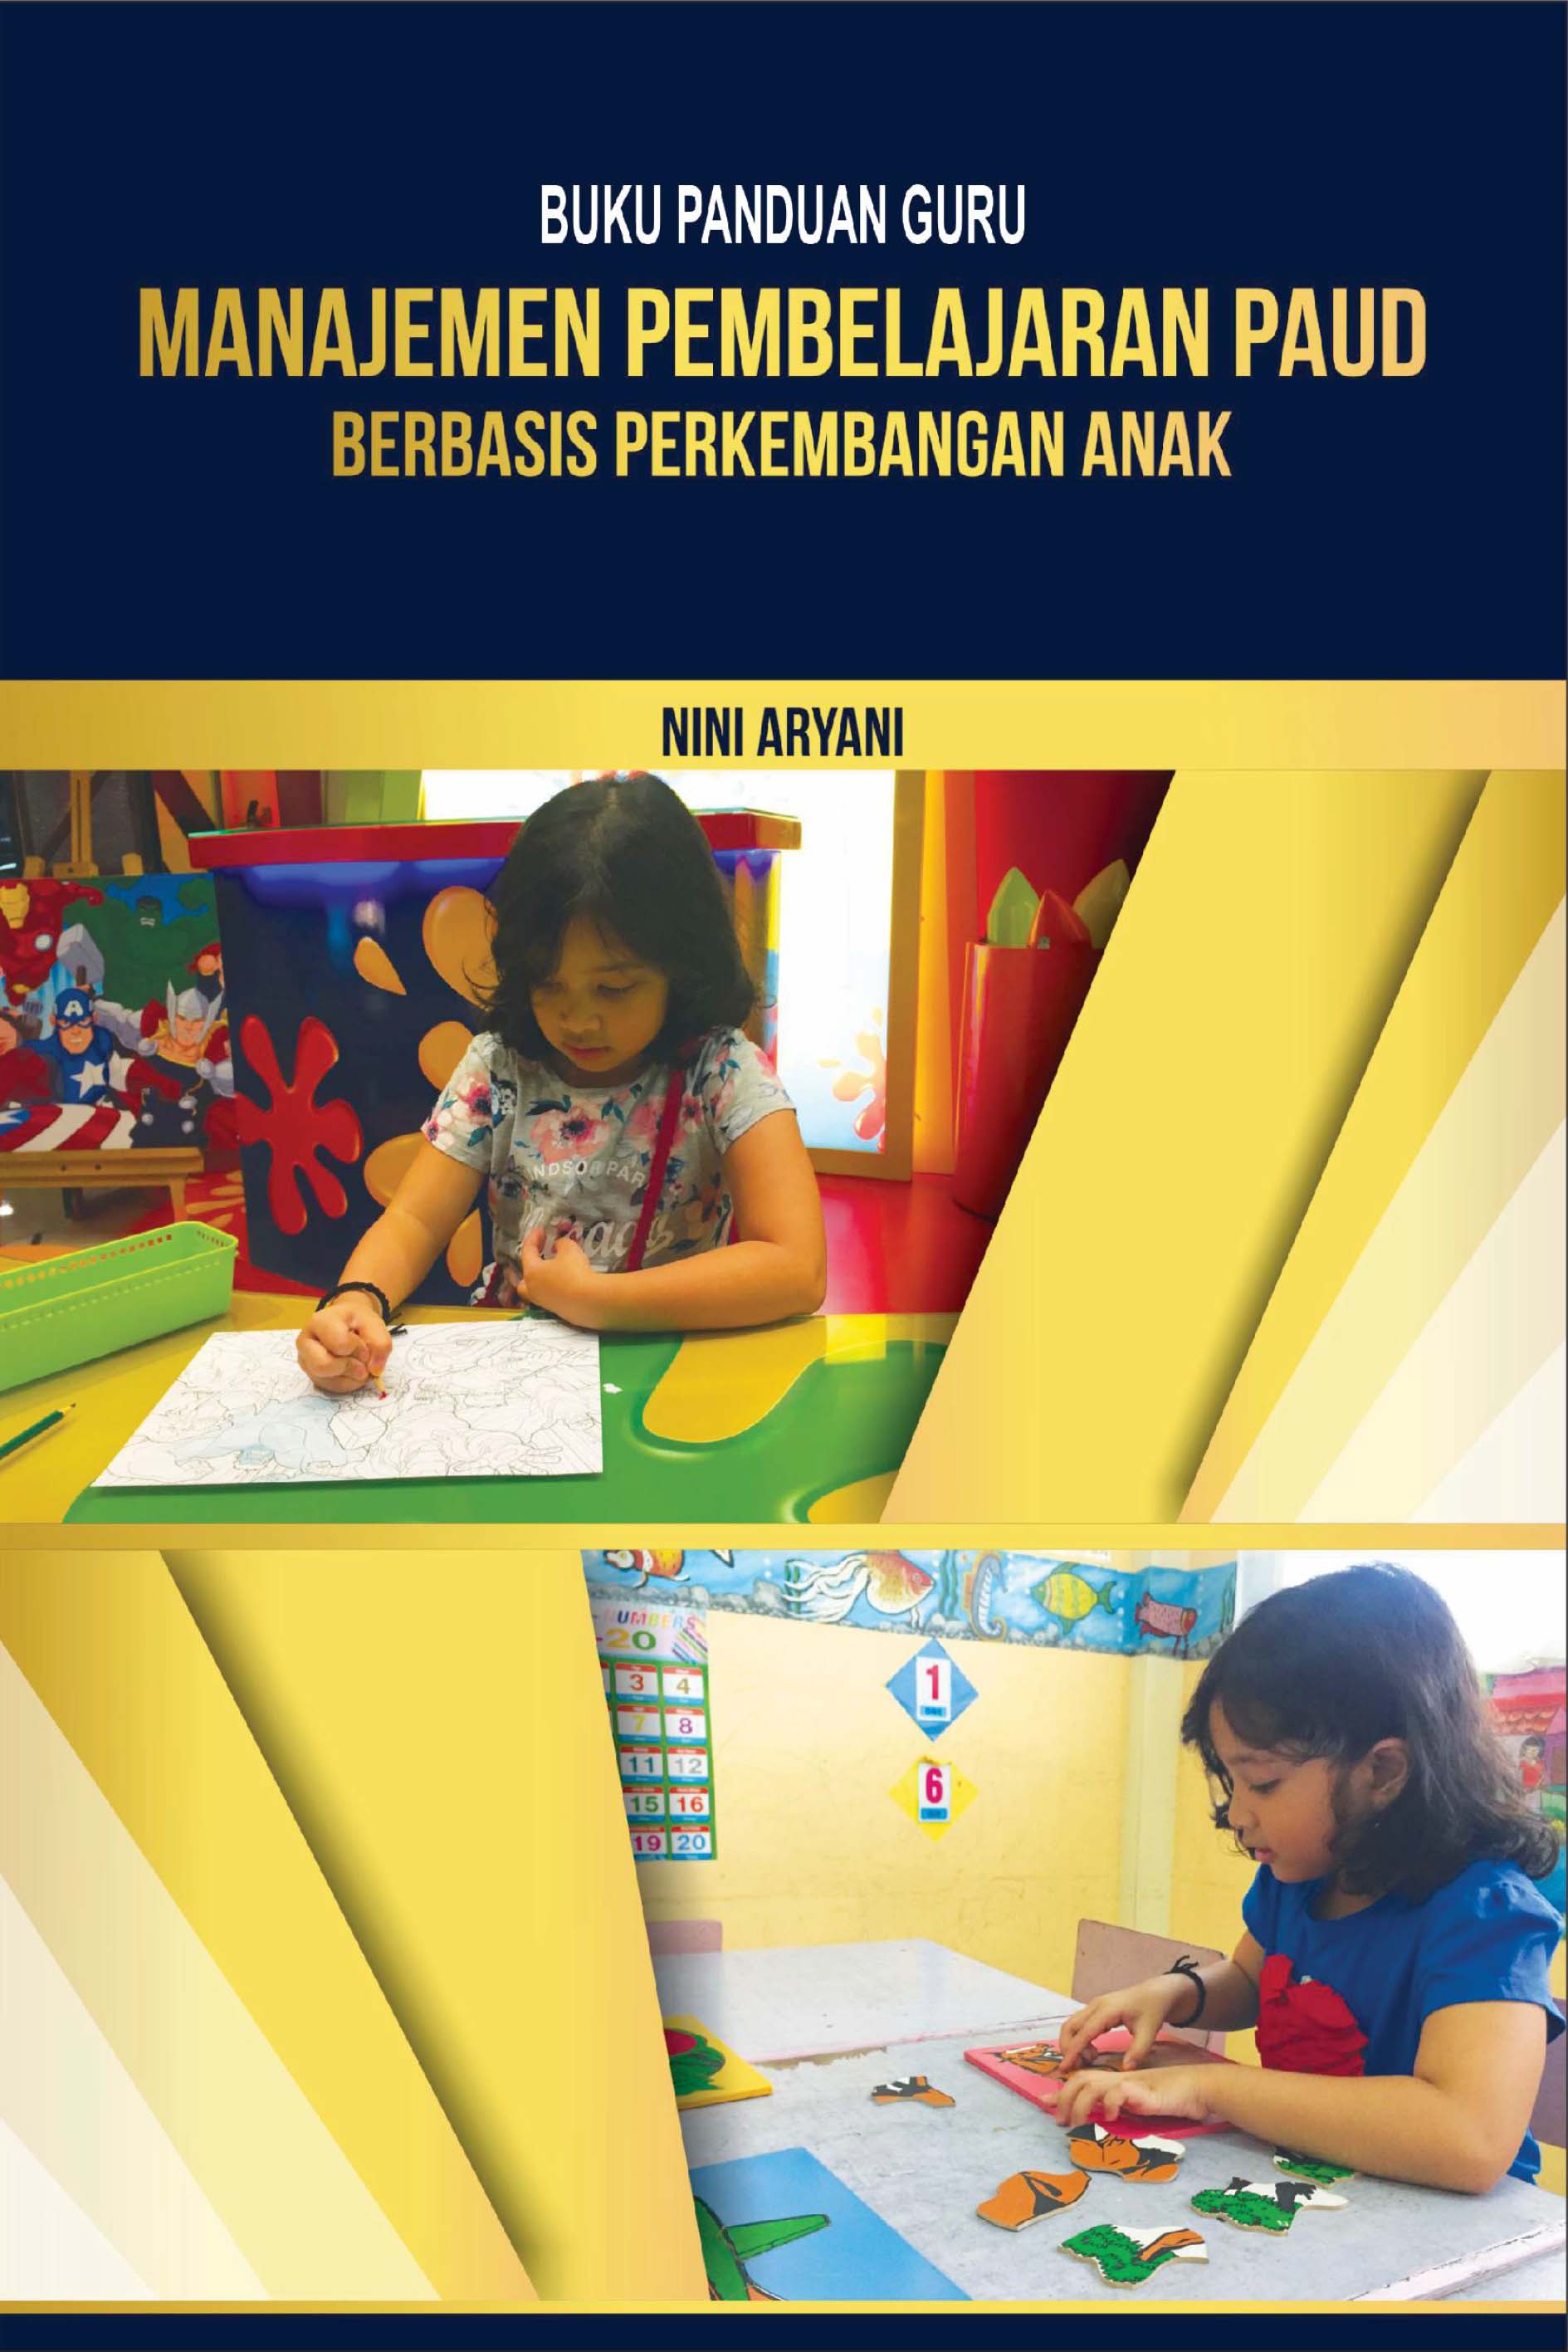 Buku Panduan Guru: Manajemen Pembelajaran PAUD Berbasis Perkembangan Anak